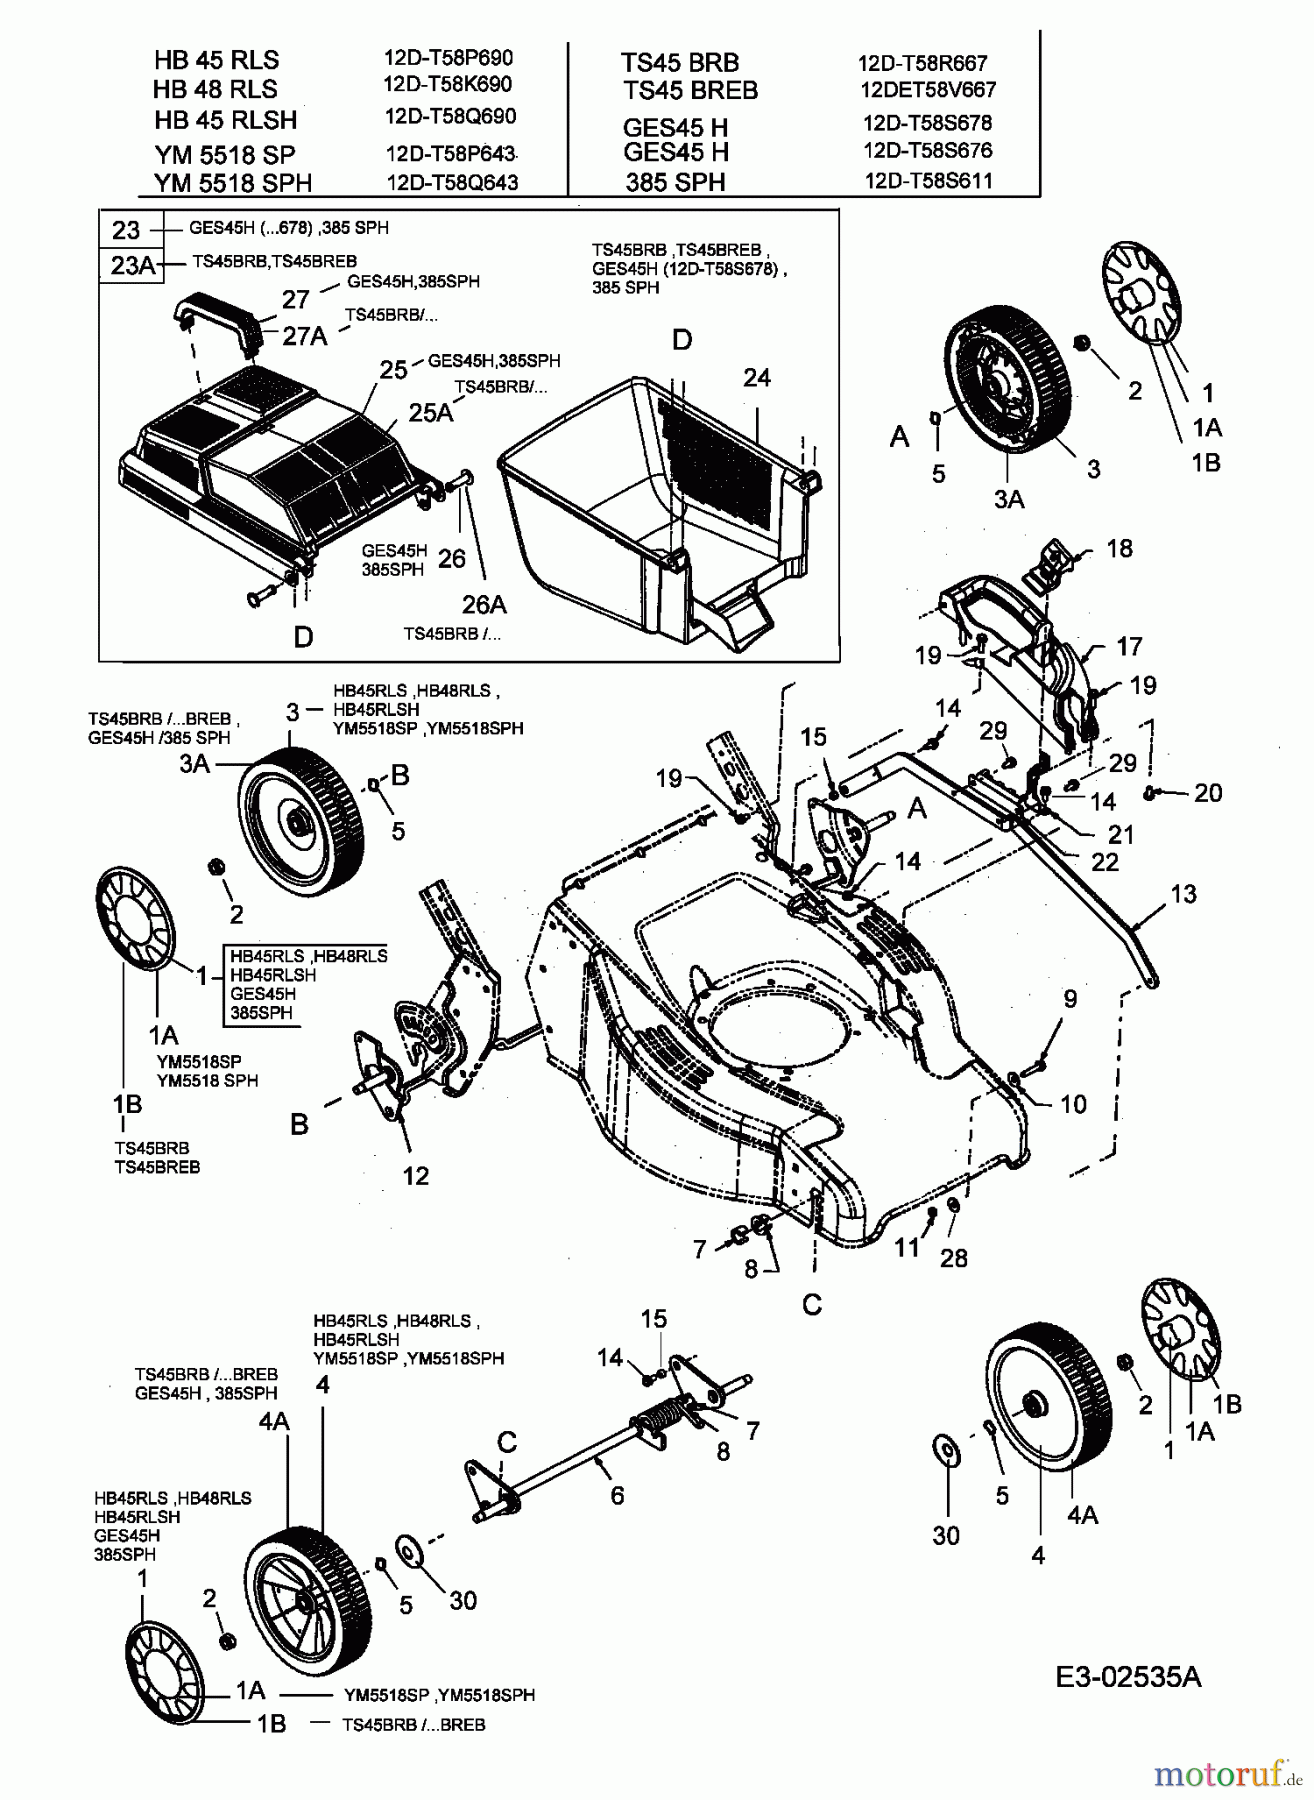  MTD Petrol mower self propelled GES 45 H 12D-T58S678  (2005) Grass box, Wheels, Cutting hight adjustment